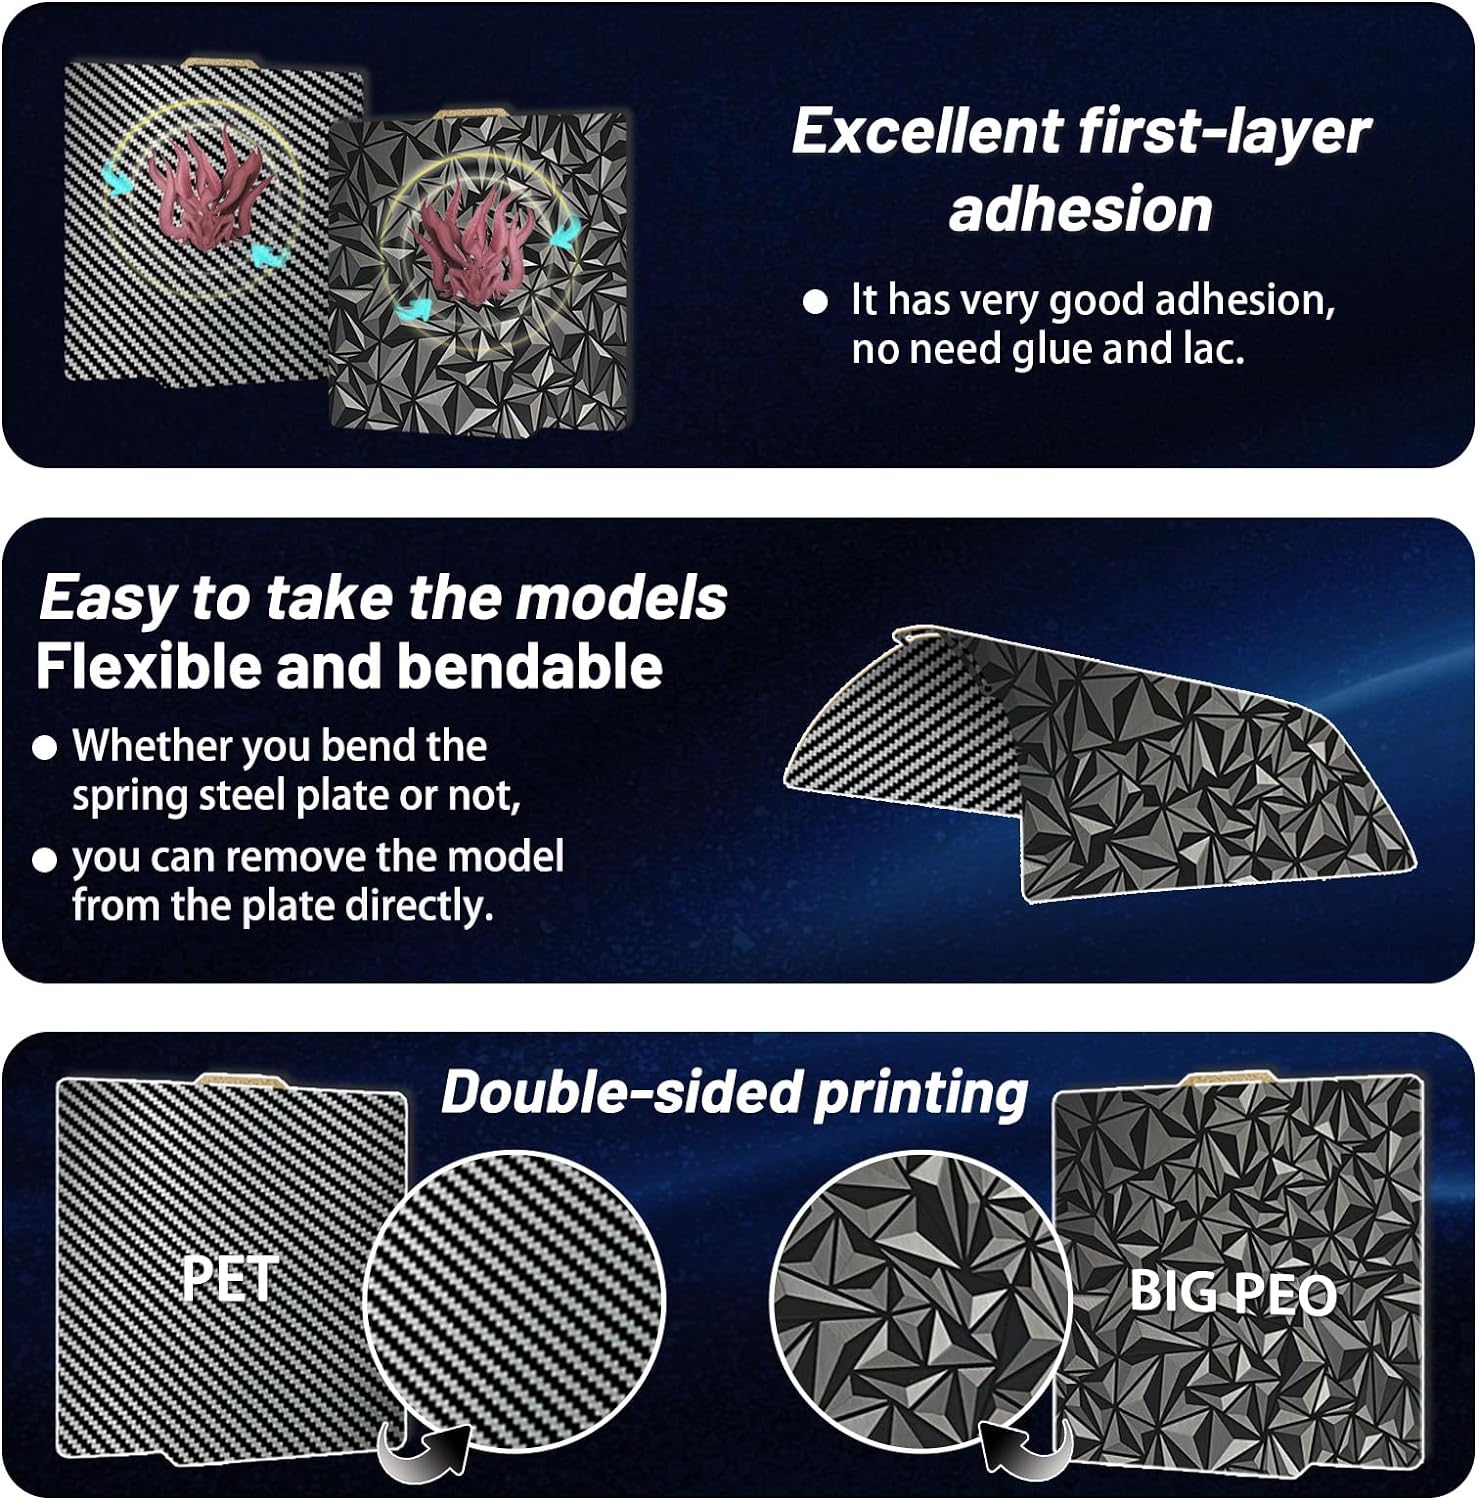 wefuit-3d-printer-peo-pet-build-plate-for-bambu-lab-x1x1cx1ep1pp1sa1-3d-printerdiamond-peocarbon-fiber-pet-surface-257x2-4 Wefuit 3D Printer PEO PET Build Plate Review